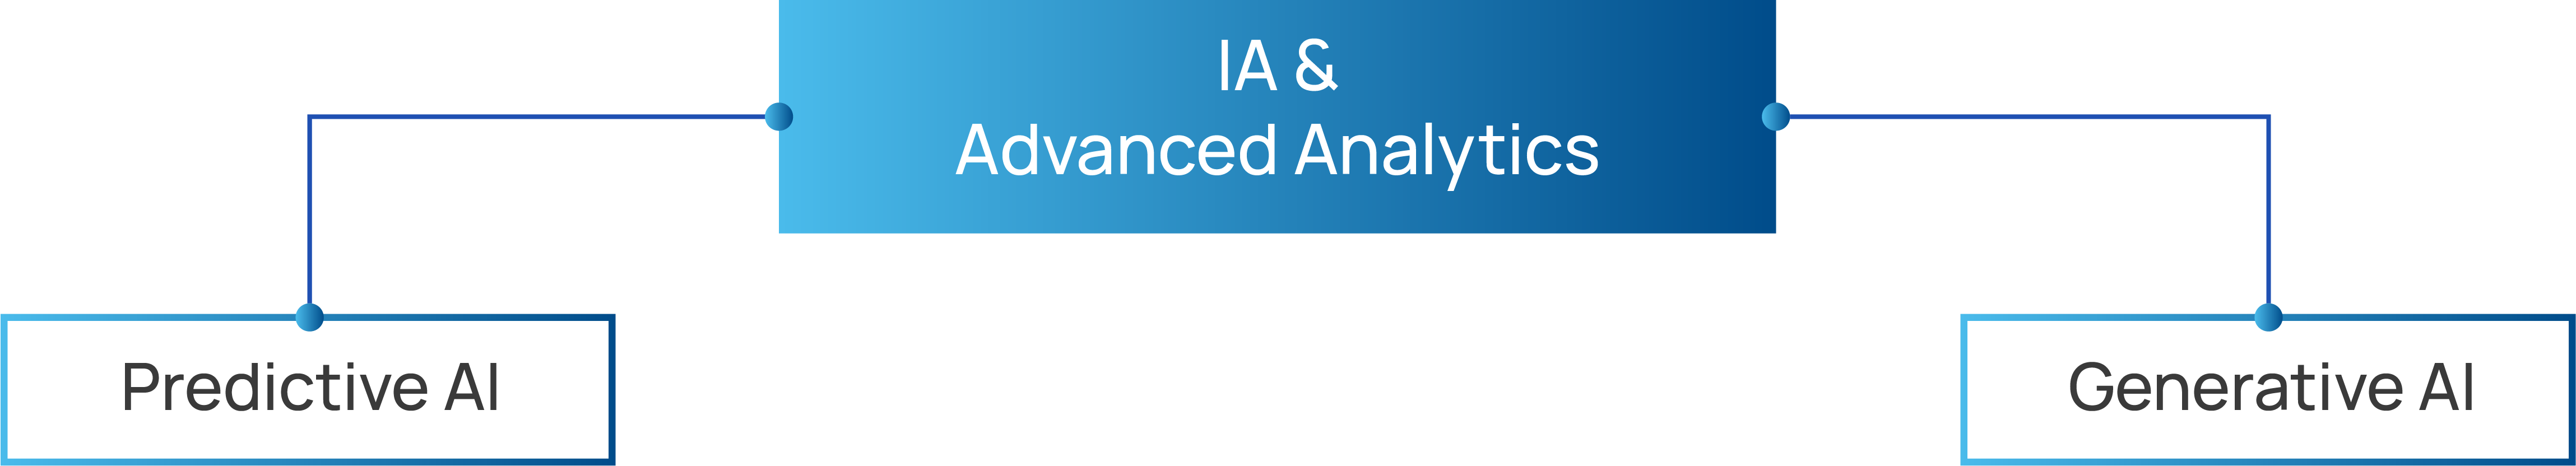 Ia&advanced Analytics